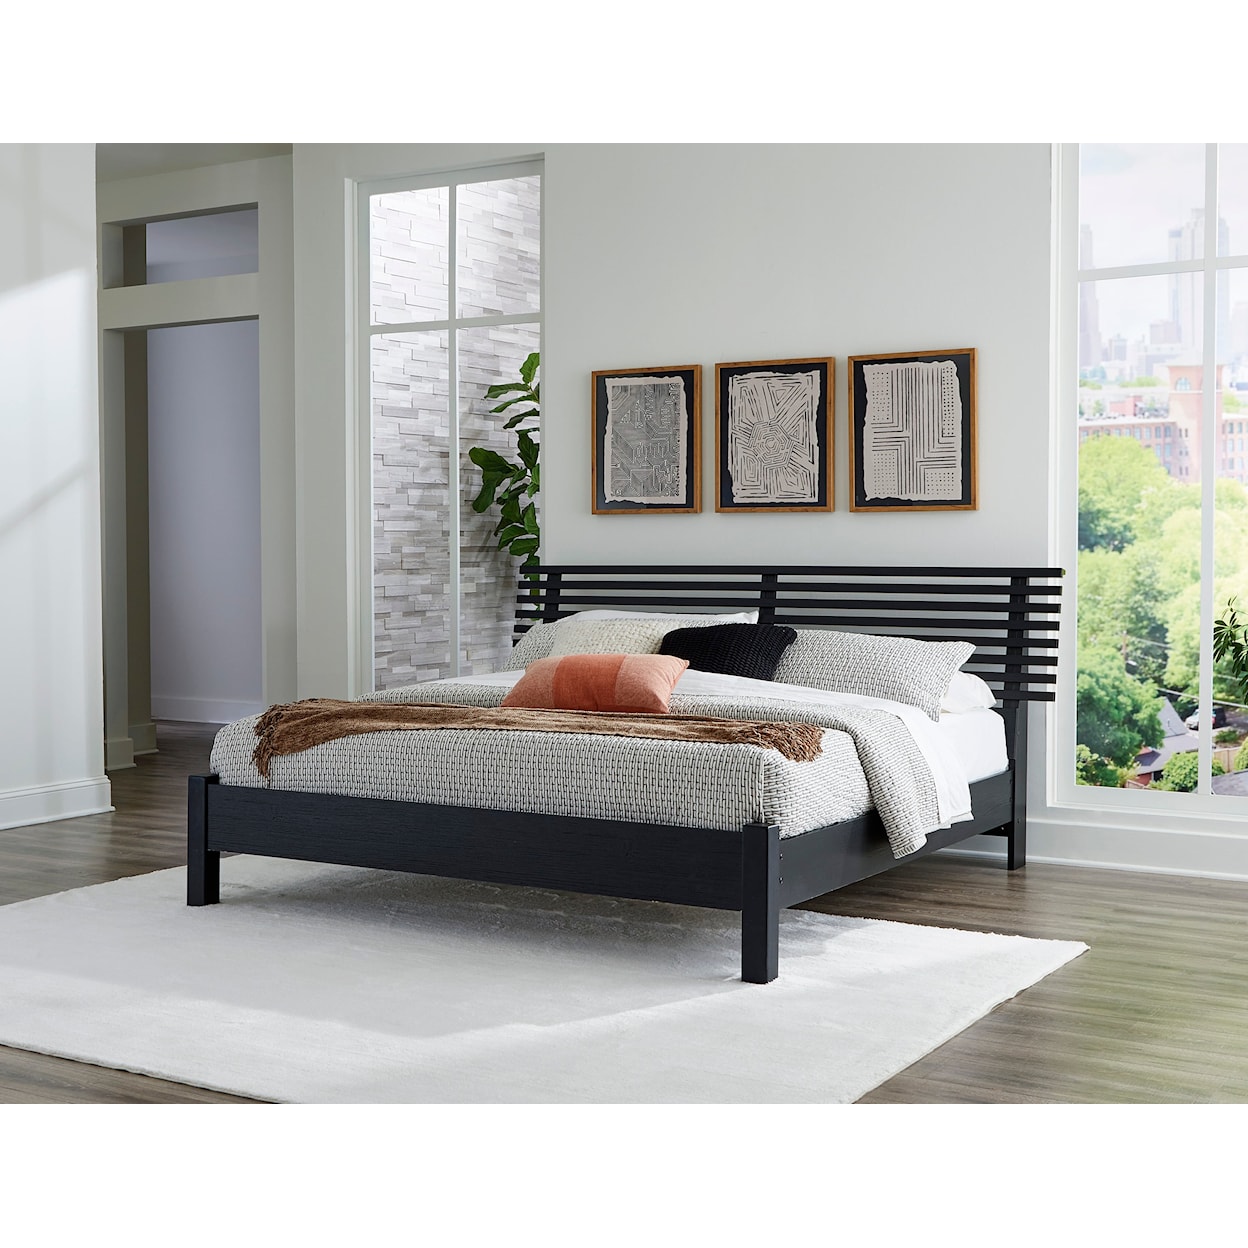 Ashley Furniture Signature Design Danziar Queen Slat Panel Bed